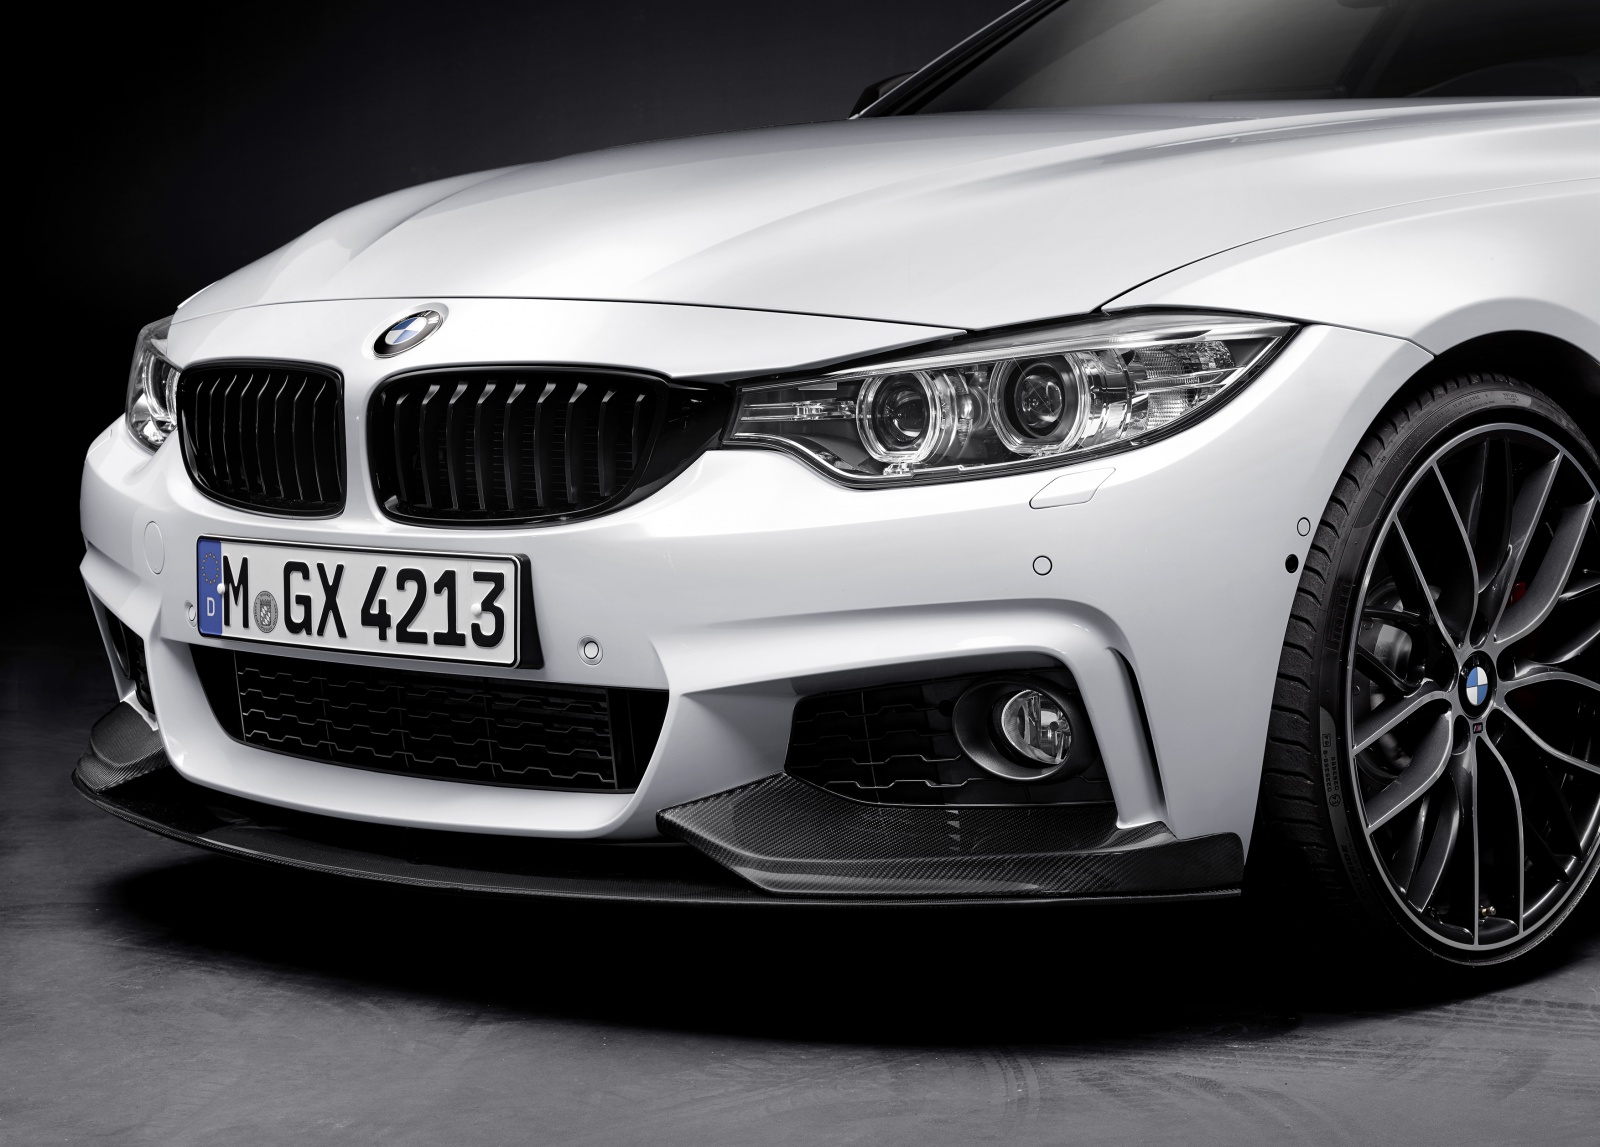 BMW 4 Series M Performance Backgrounds, Compatible - PC, Mobile, Gadgets| 1600x1147 px